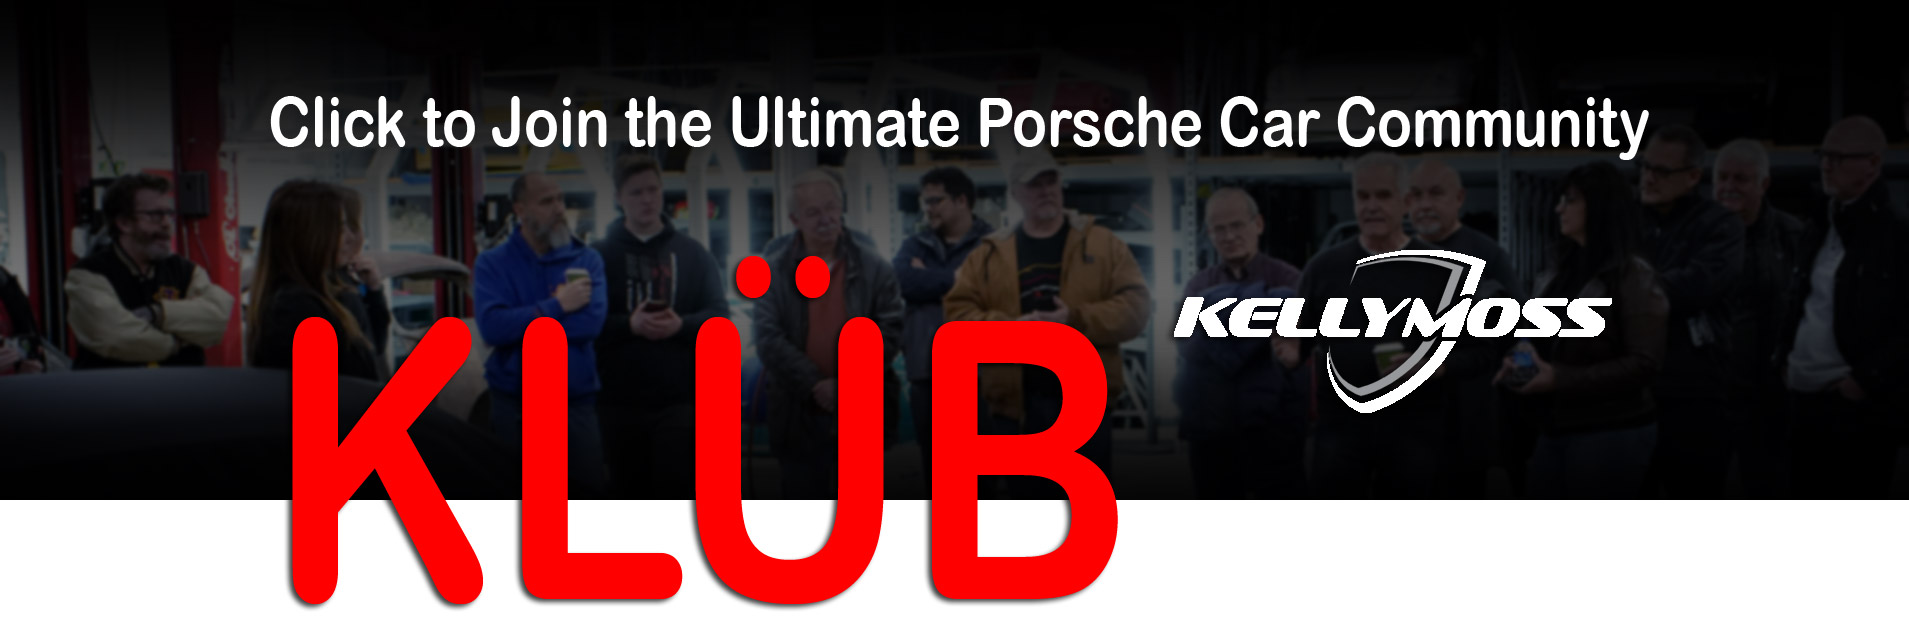 Join the Kellymoss Porsche car community